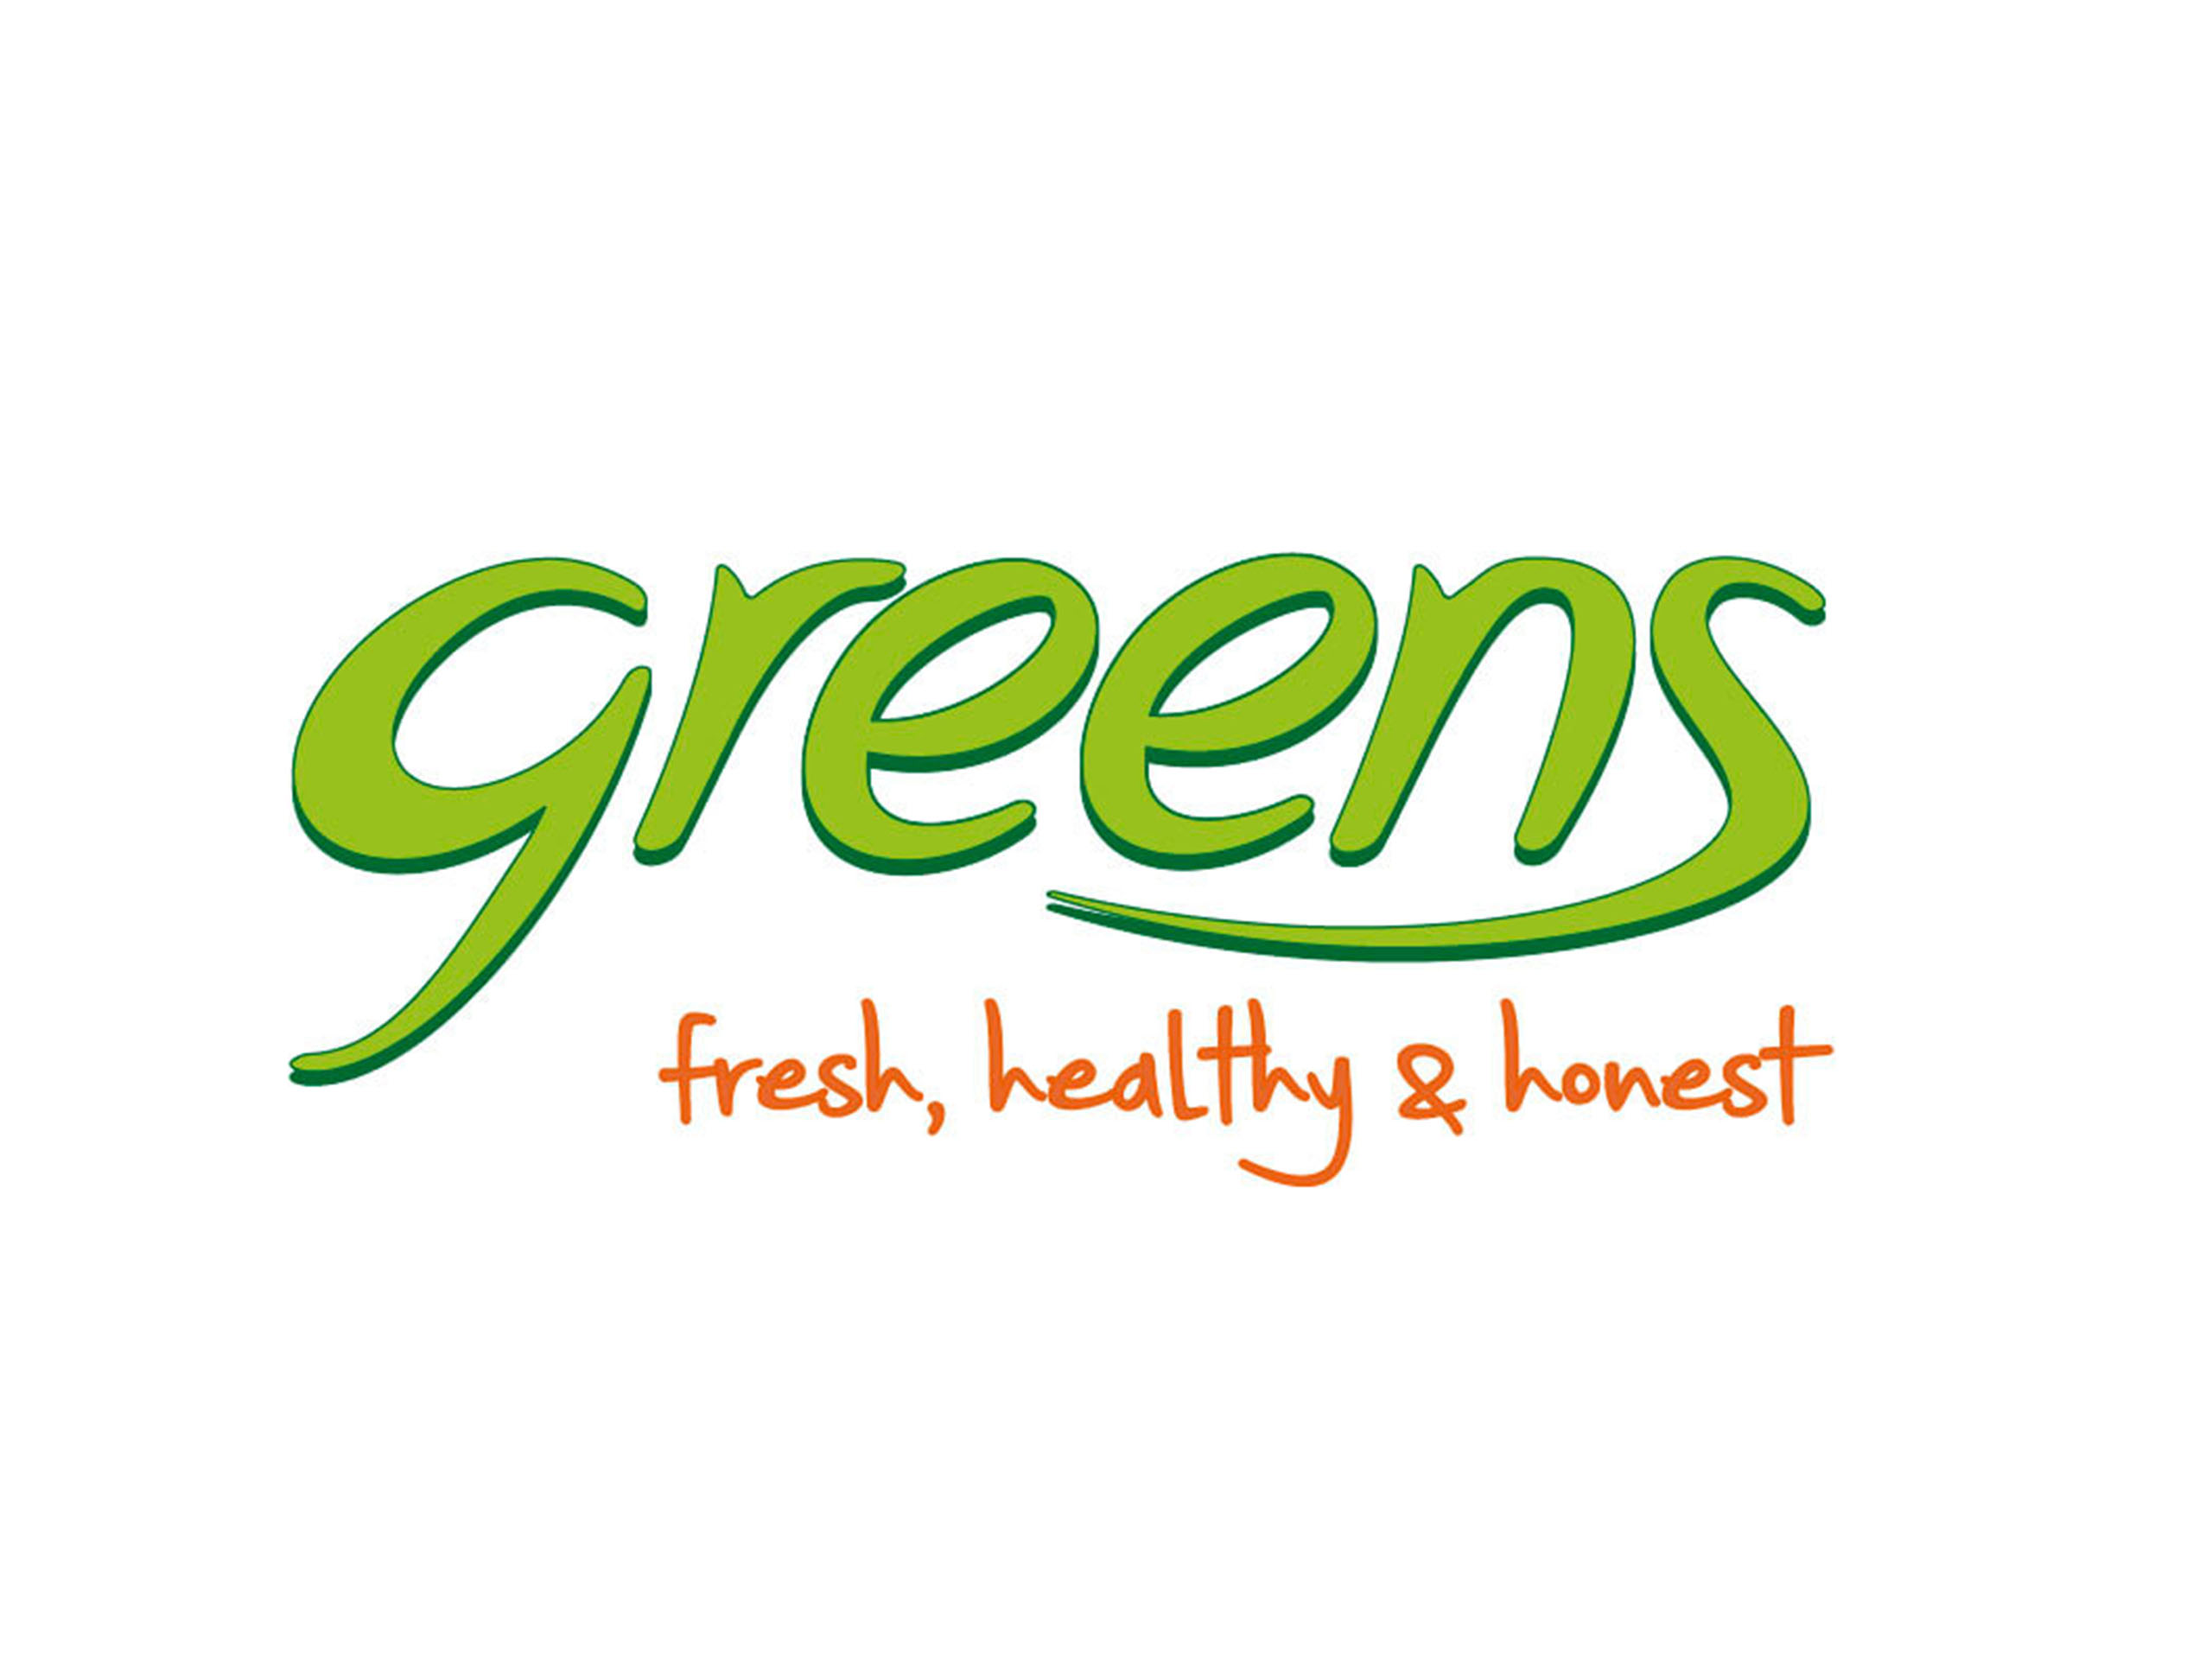 Logo Greens